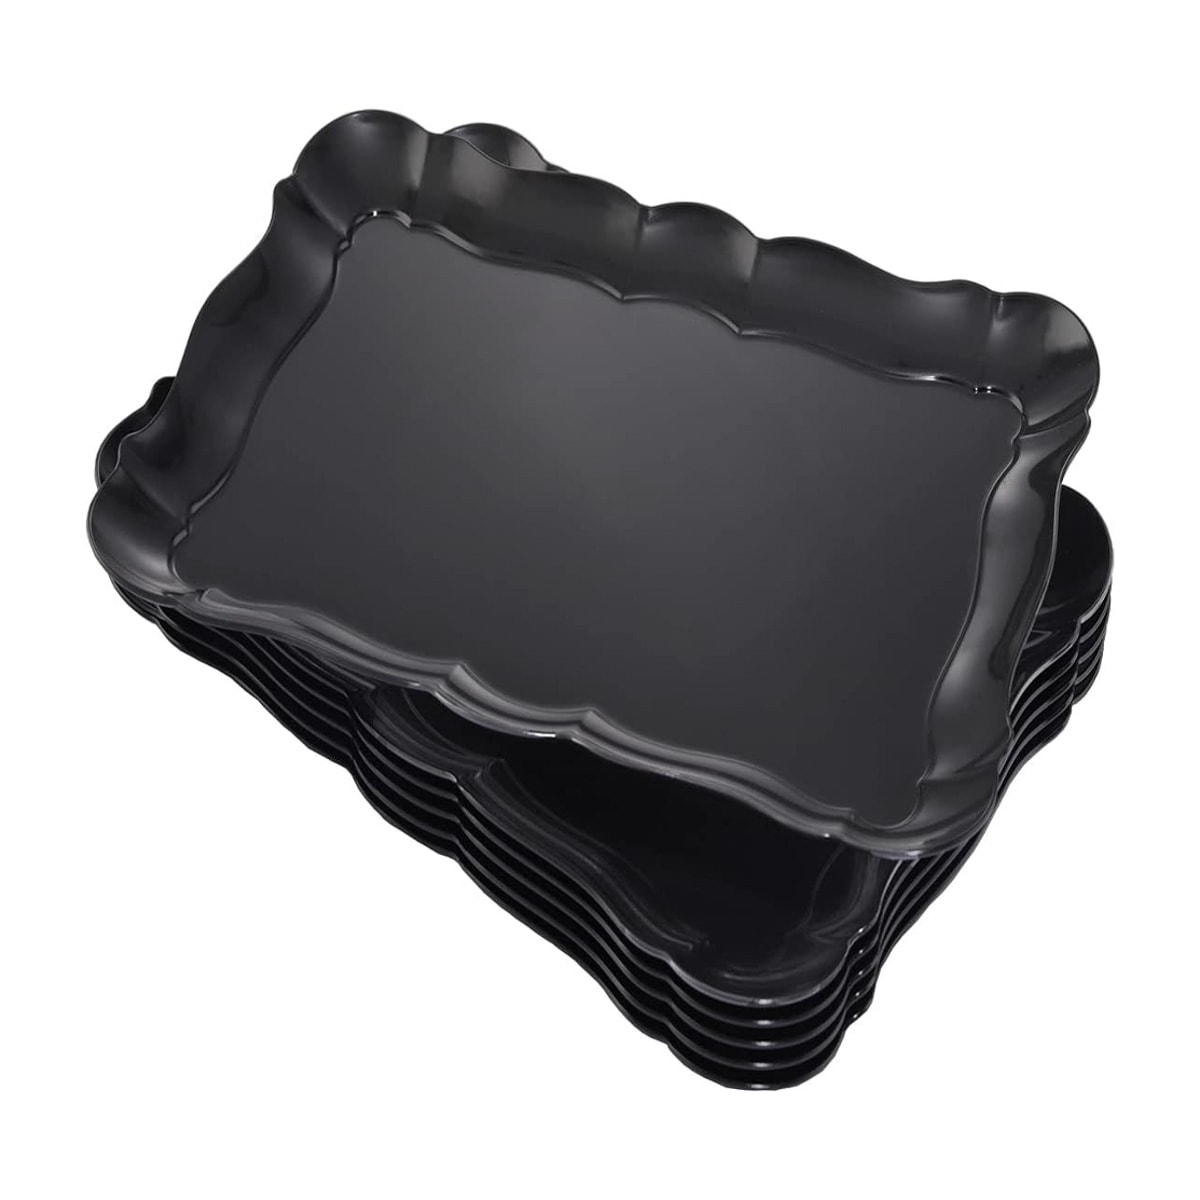 A set of black plastic serving trays.